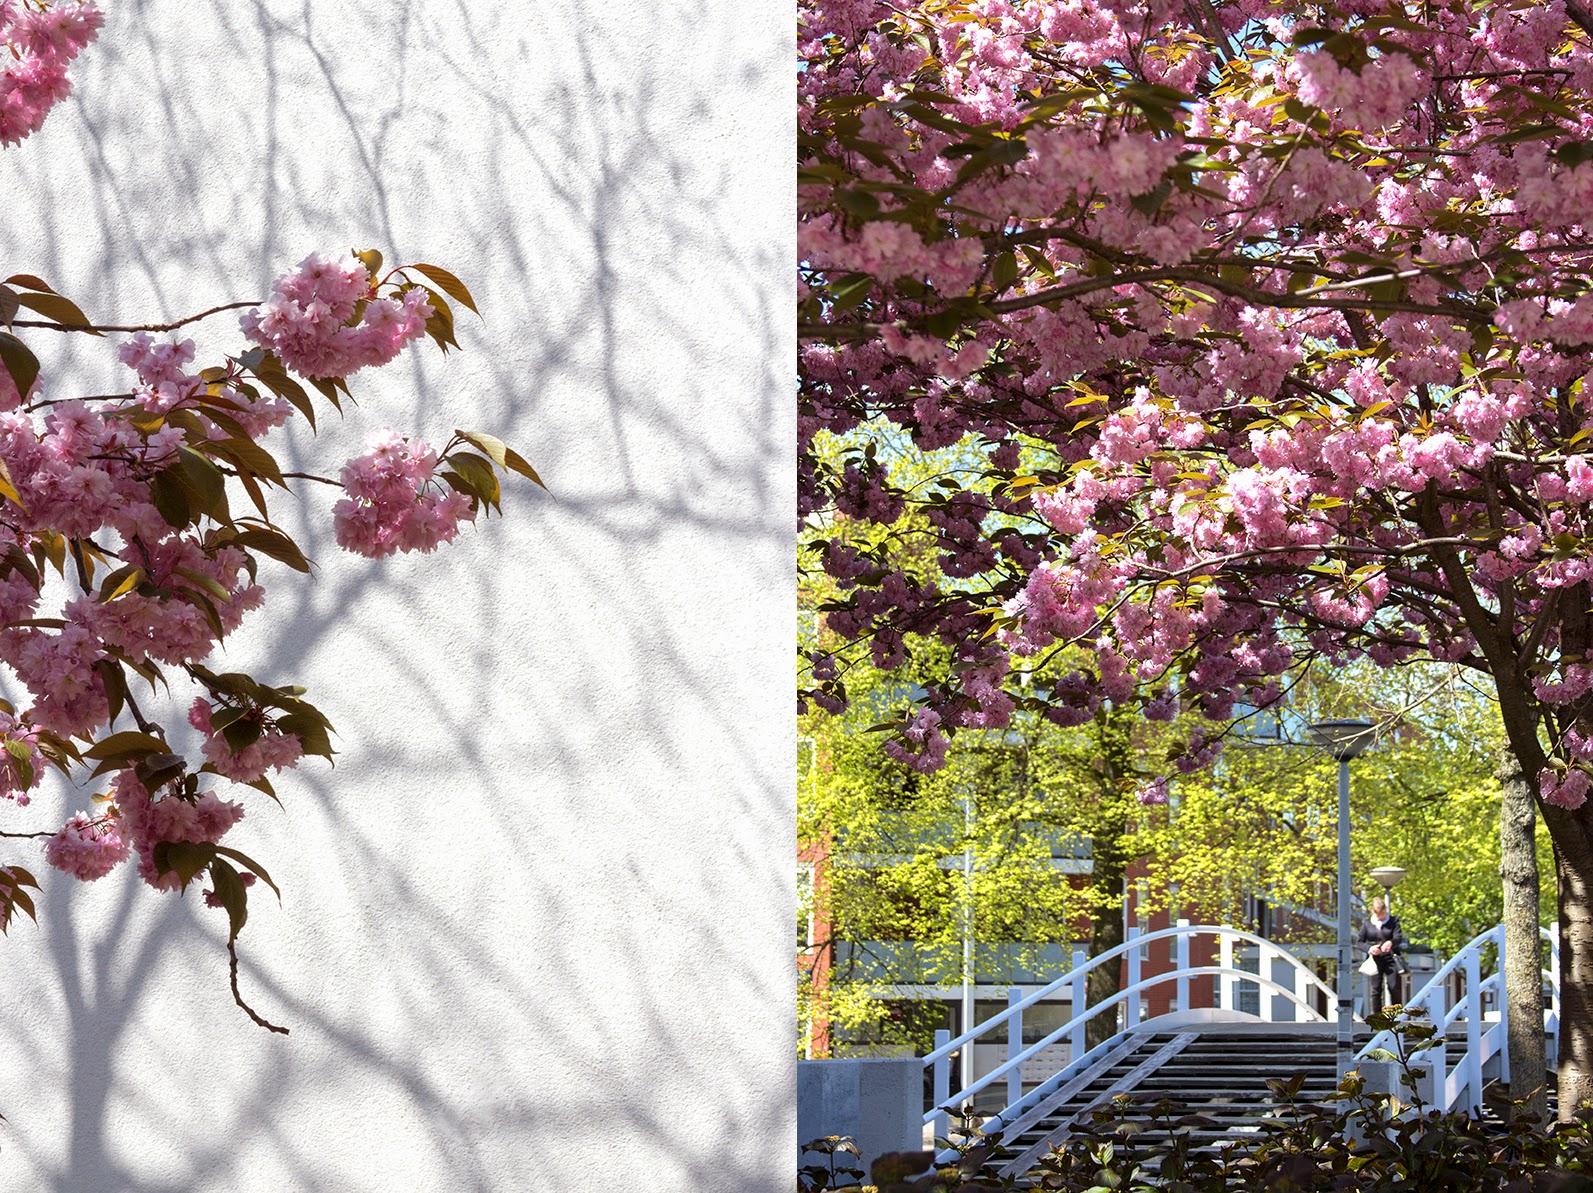 blossoms, shadows and a bridge